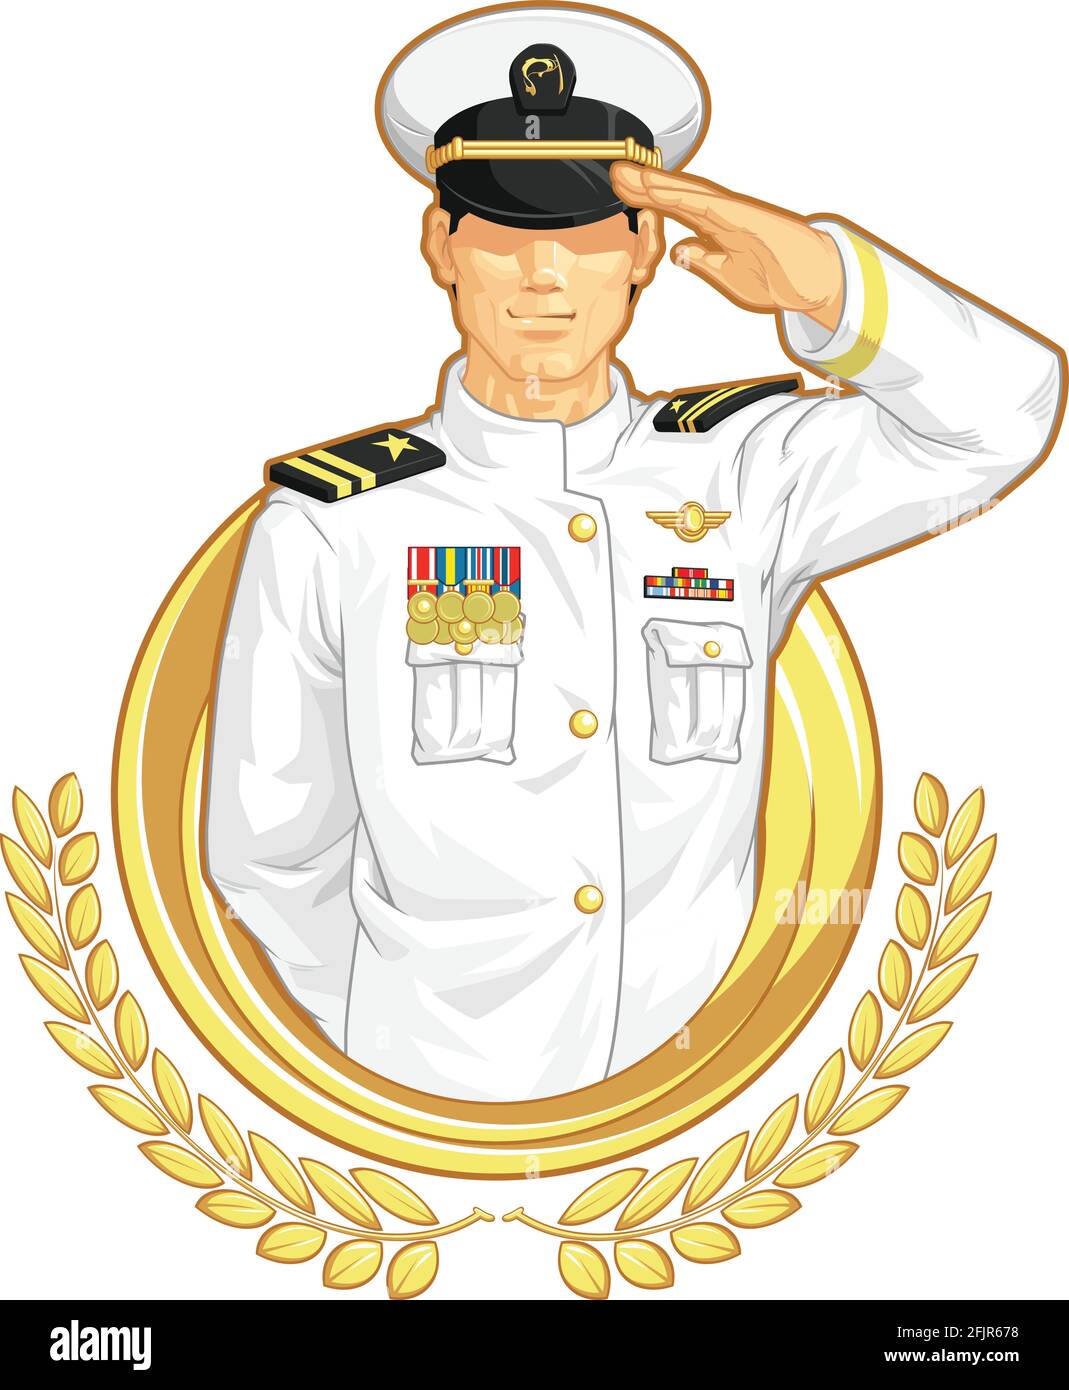 Oficial Militar Salute Ejército Fuerza Aérea Marina General Cartoon Dibujo  Imagen Vector de stock - Alamy